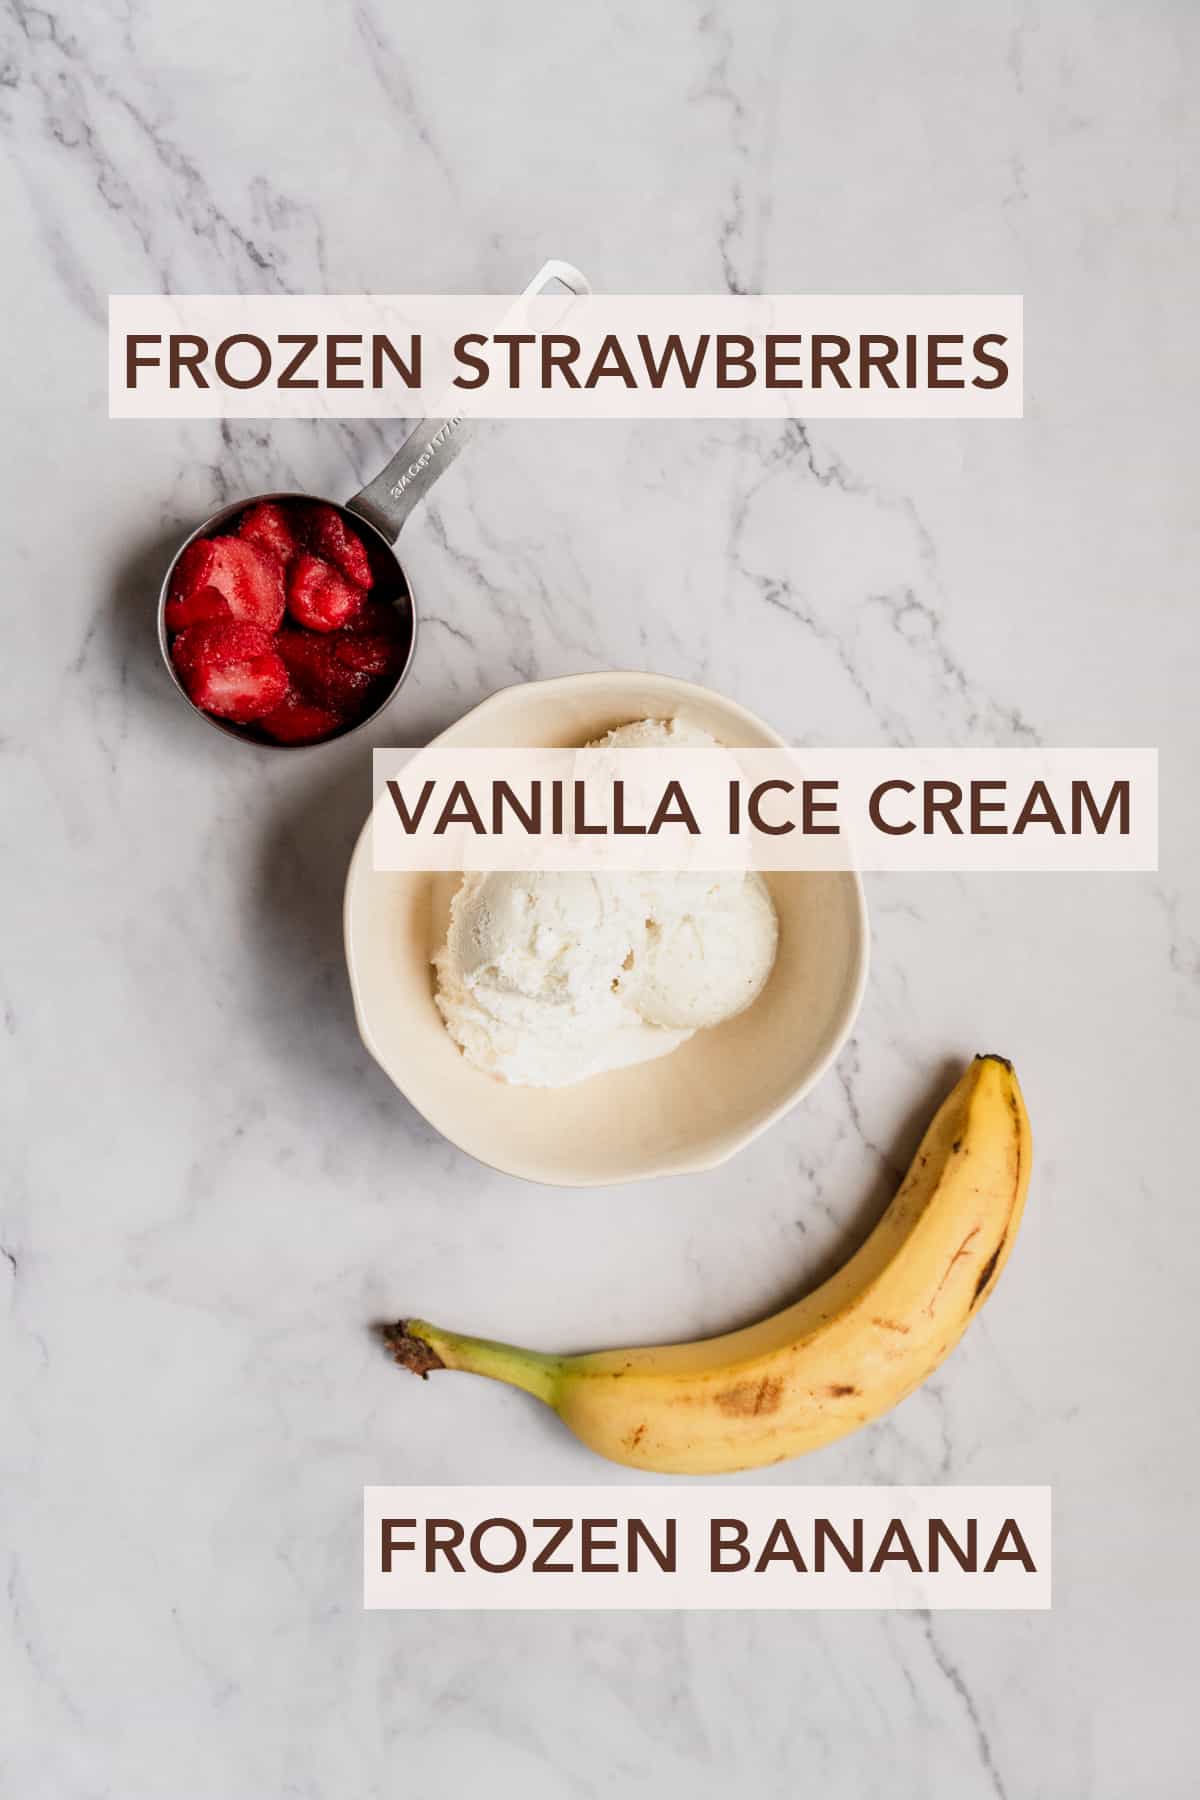 strawberry-banana-milkshake-ingredients-labeled.